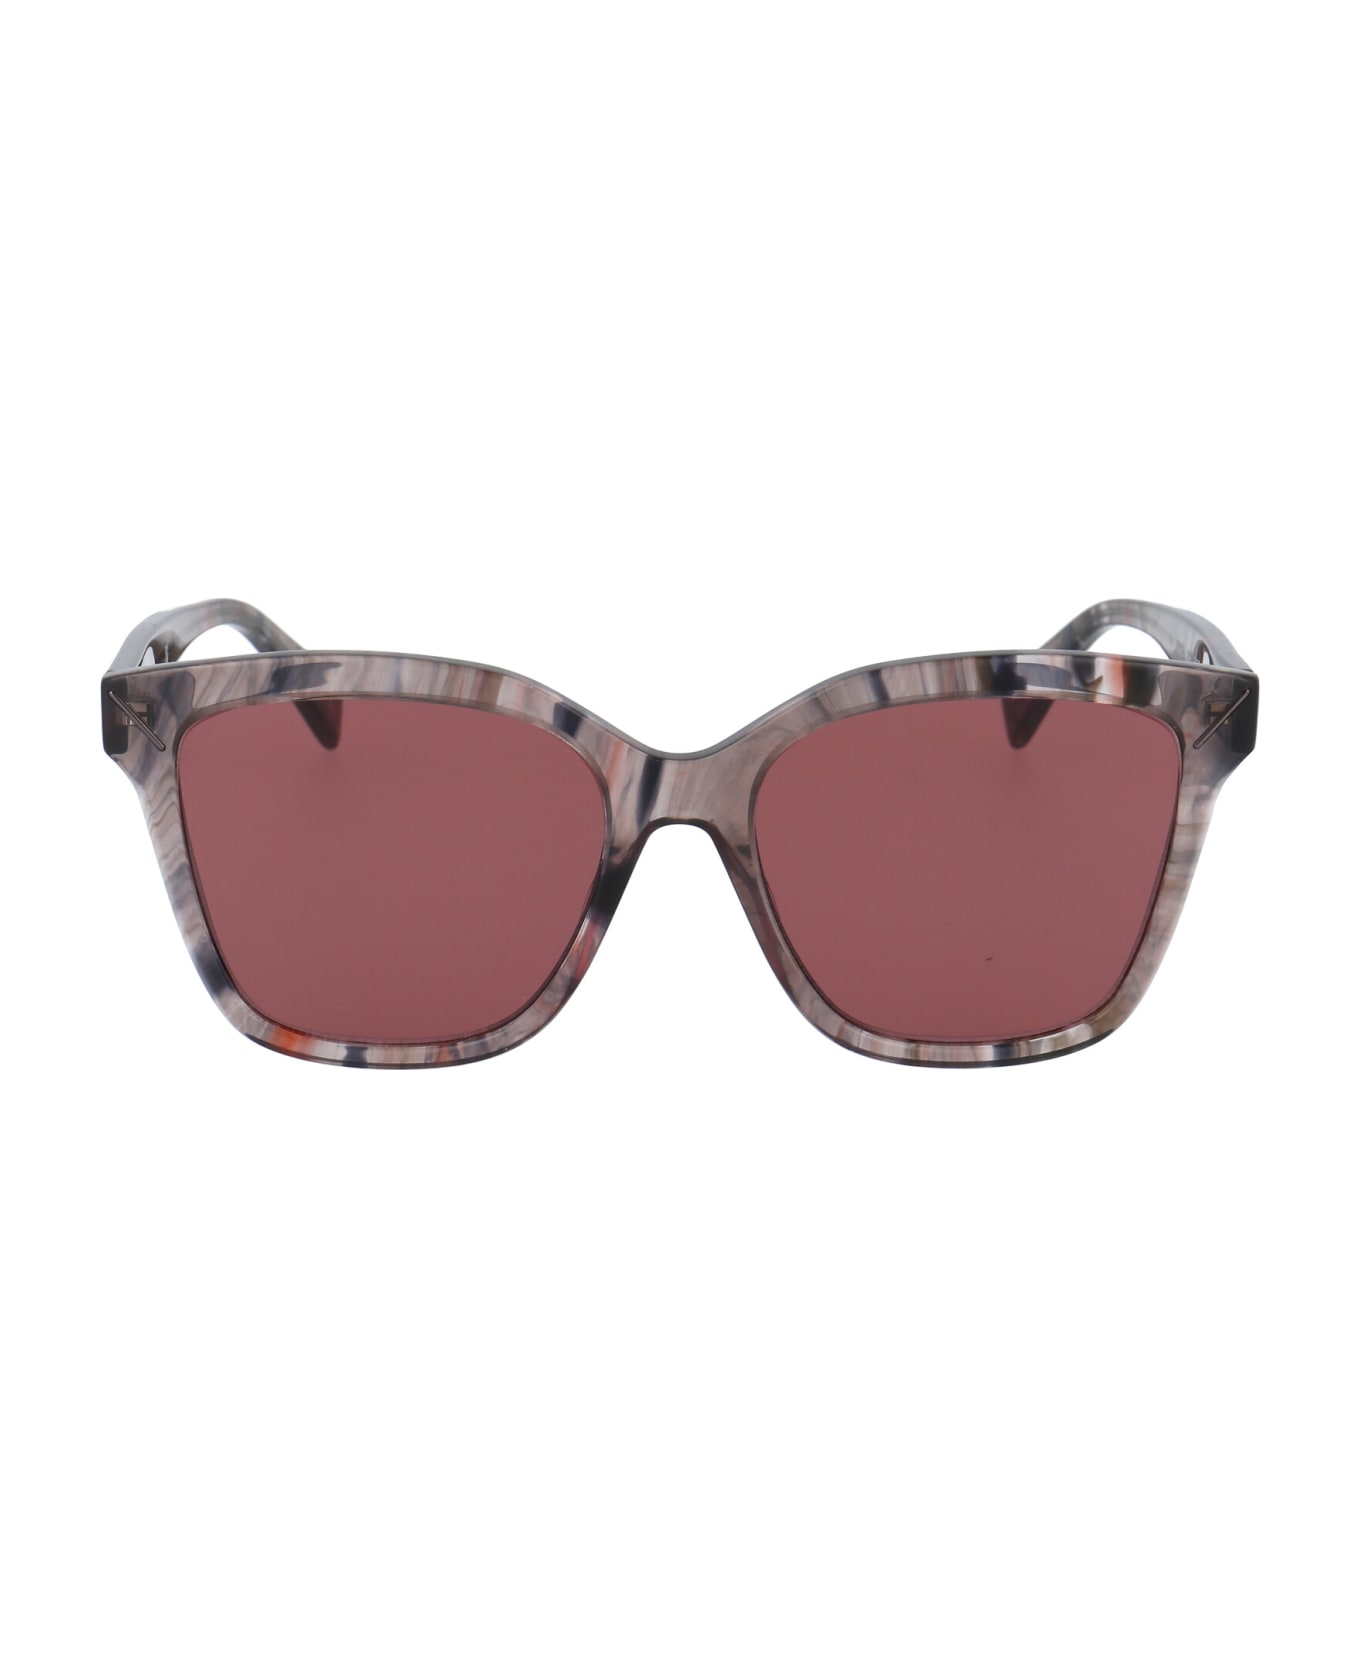 Yohji Yamamoto Ys5002 Sunglasses - 941 RED